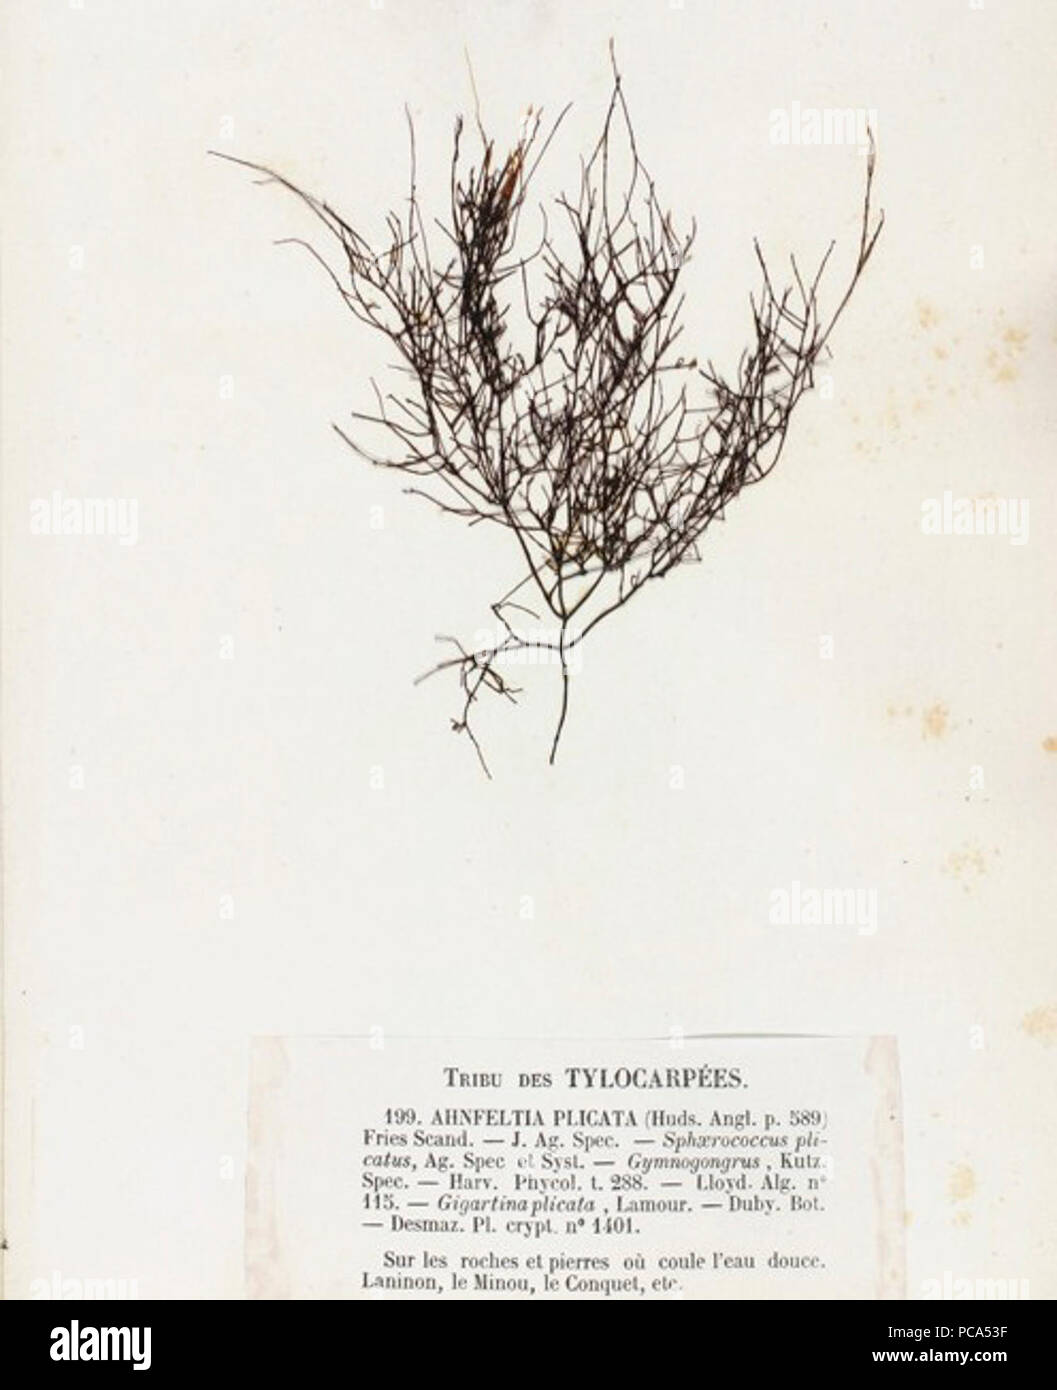 Ahnfeltia plicata Crouan. Stock Photo